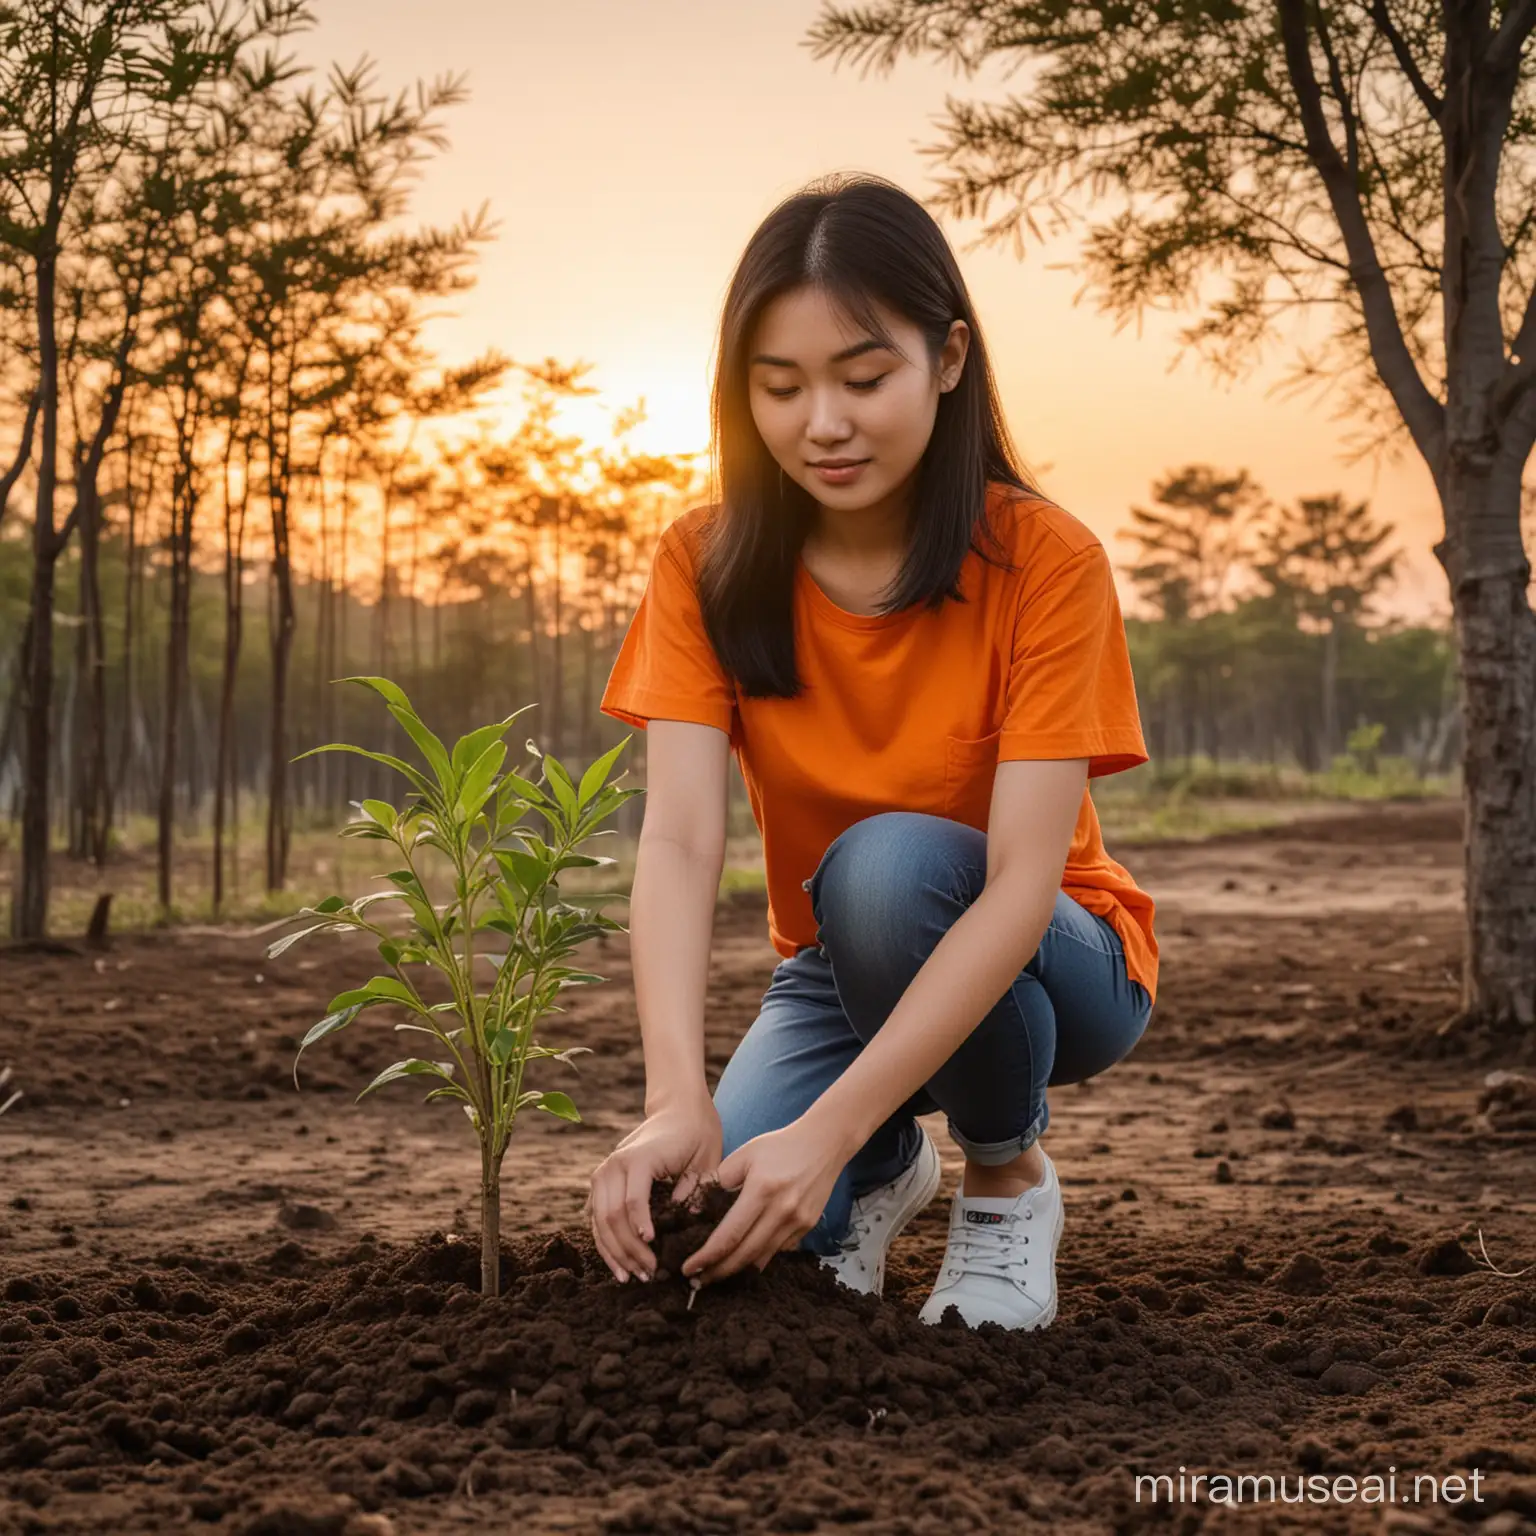 Asian Girl Planting Trees in an Orange Shirt During Sunset